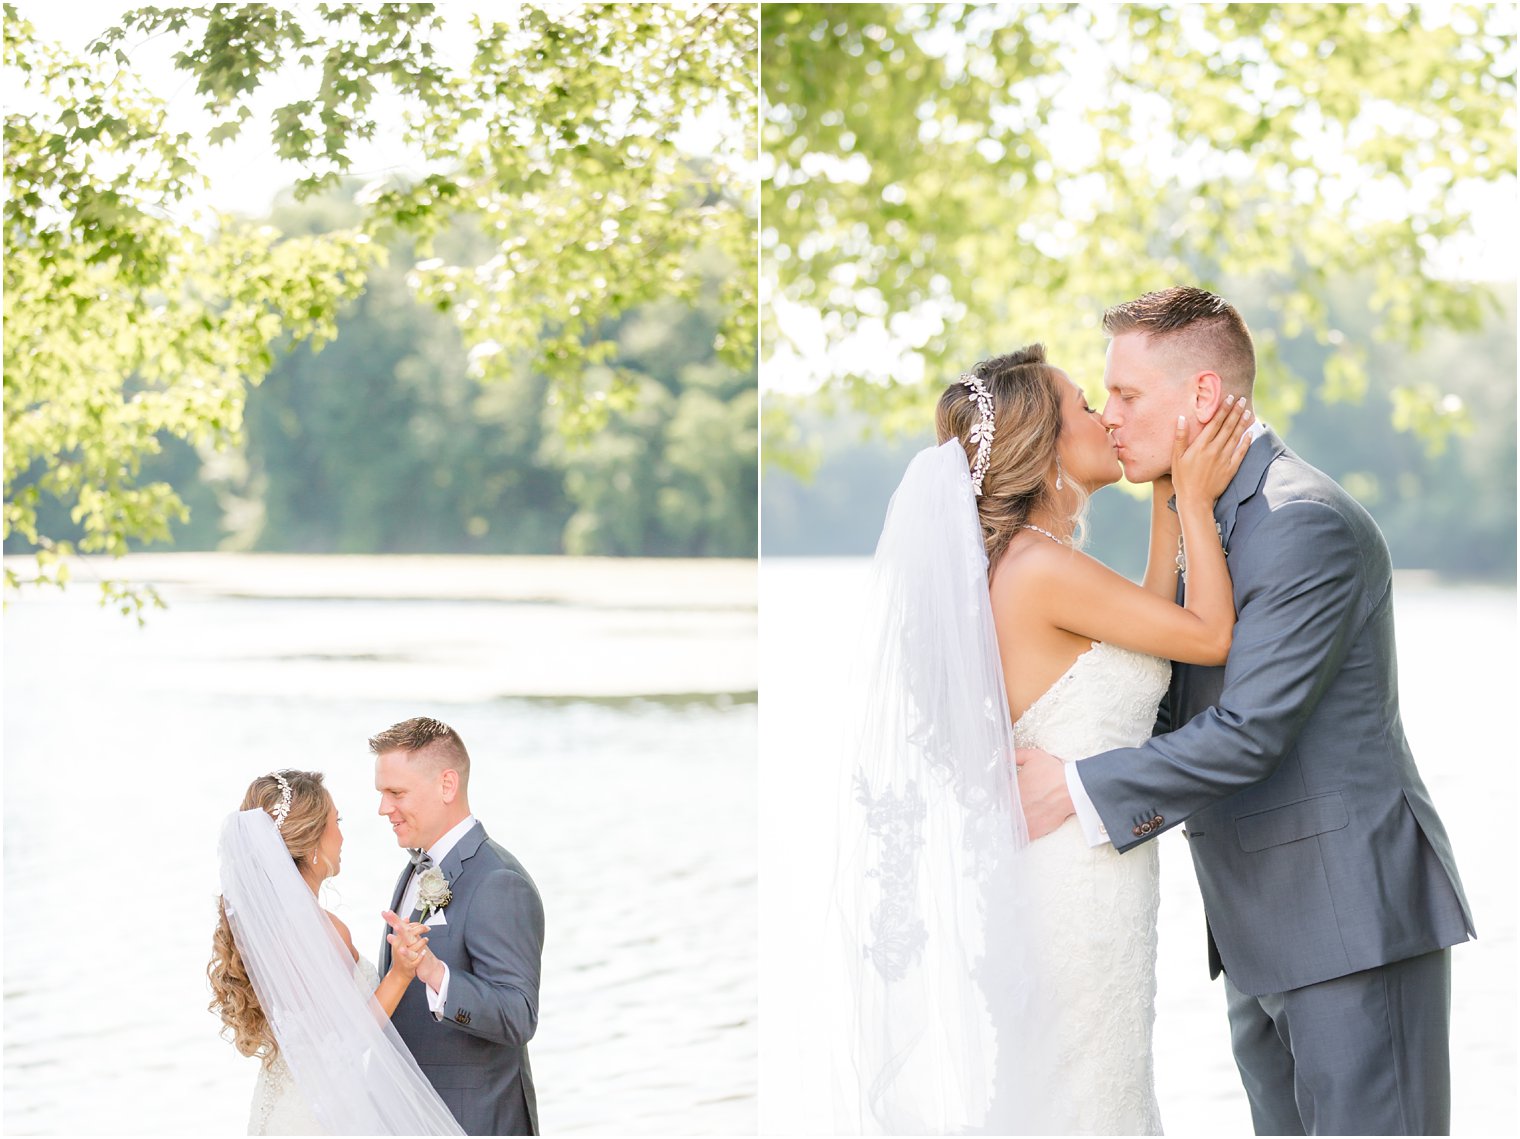 Romantic photos of bride and groom | Idalia Photography